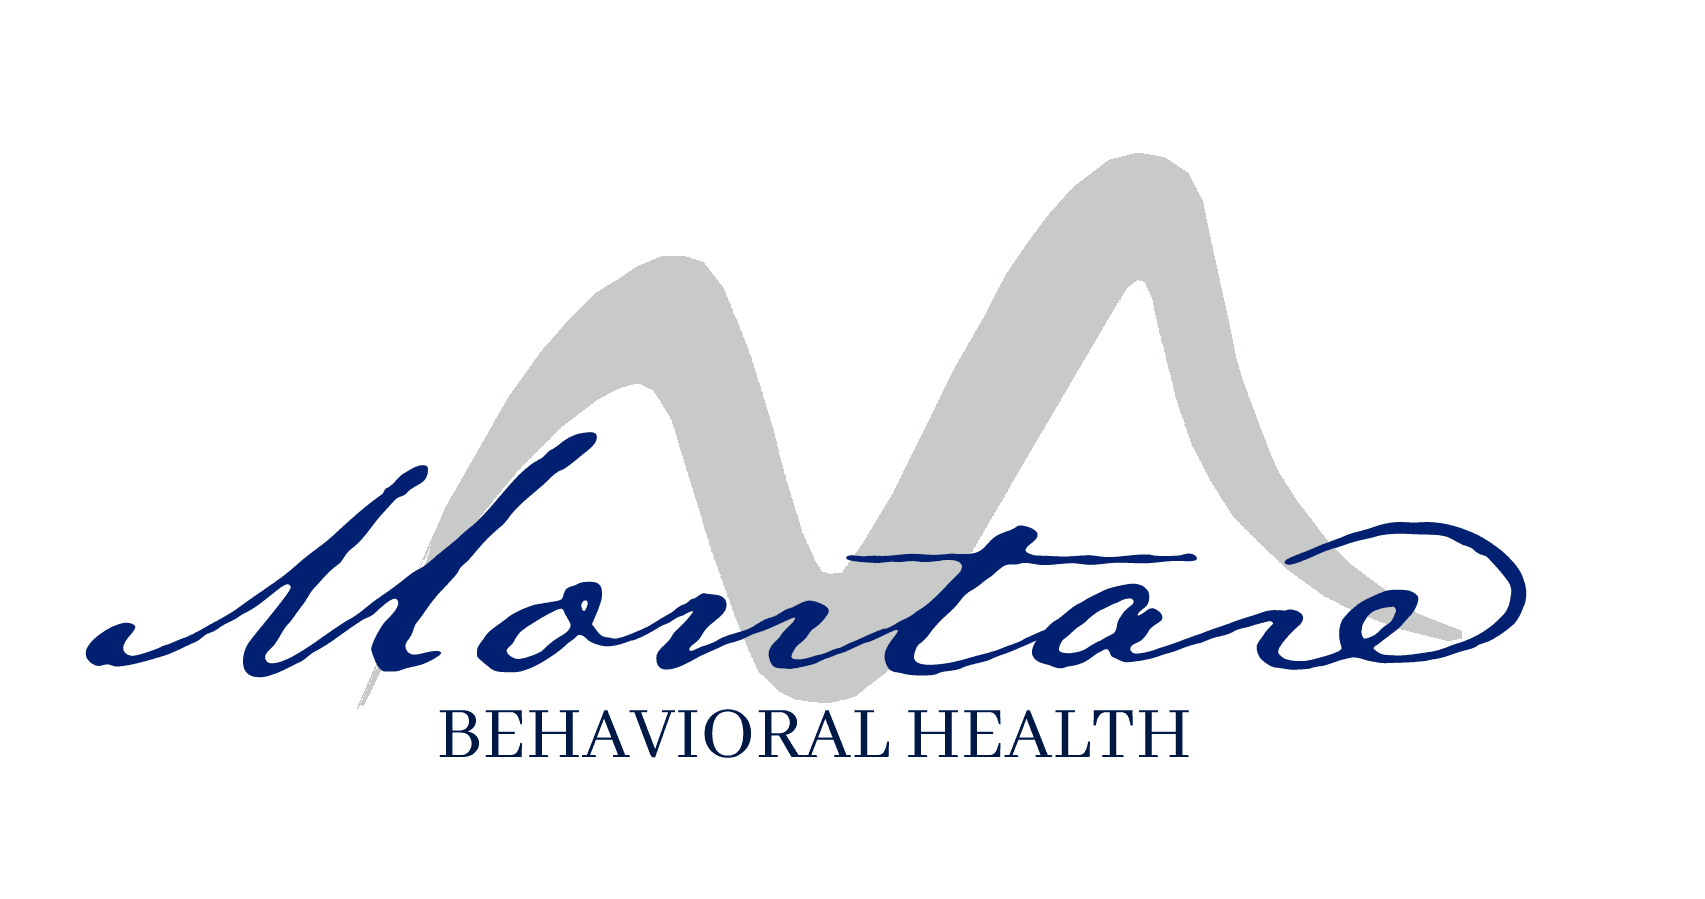 montare outpatient behavioral health logo